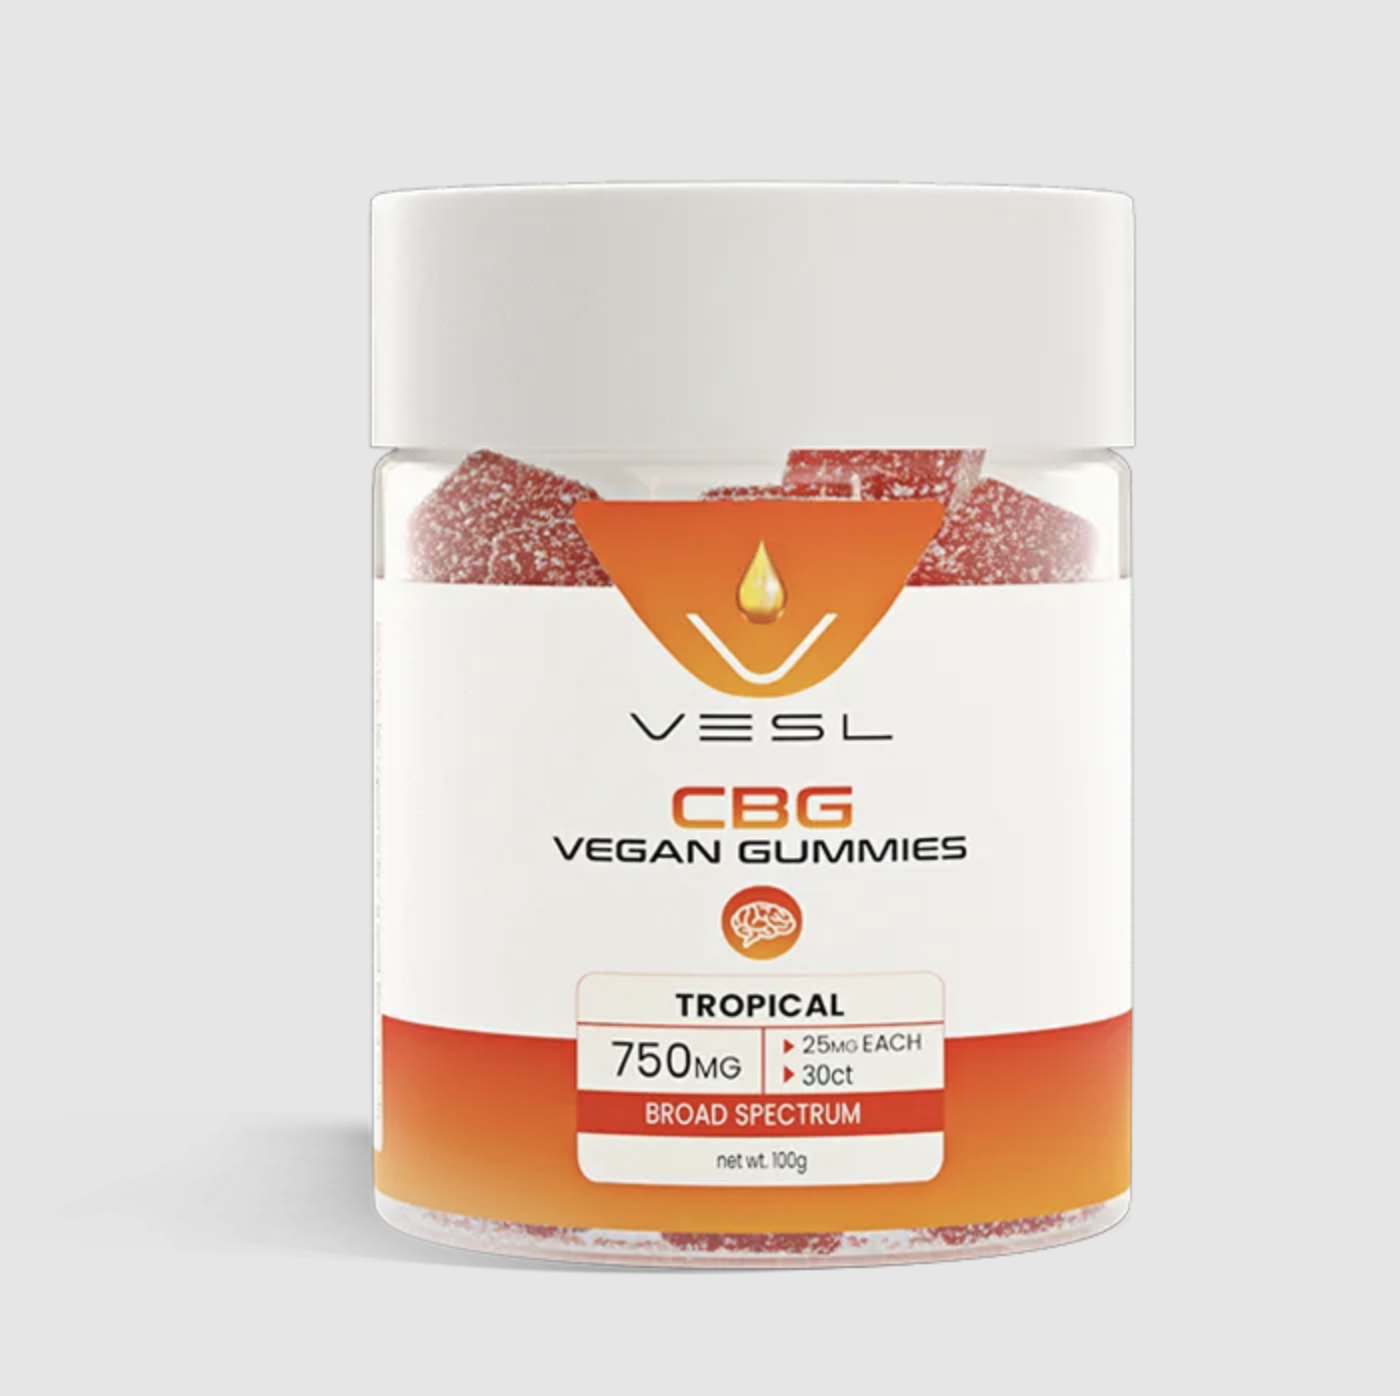 Vesl CBG Vegan Gummies Tropical 750mg